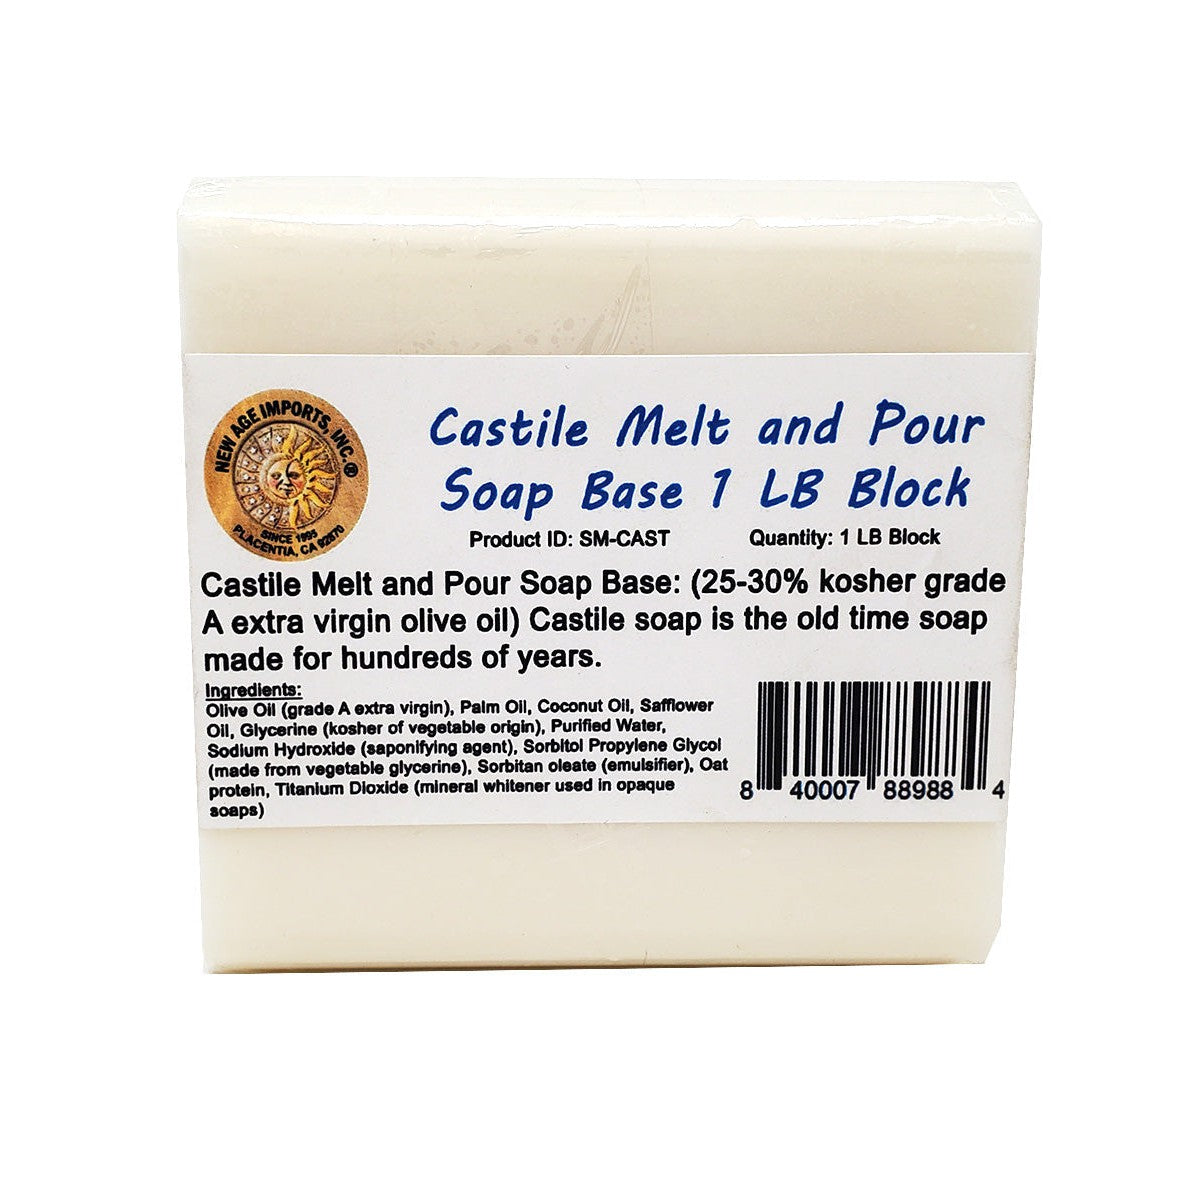 Oatmeal Melt and Pour Soap Base 1 LB Block (454 grams)